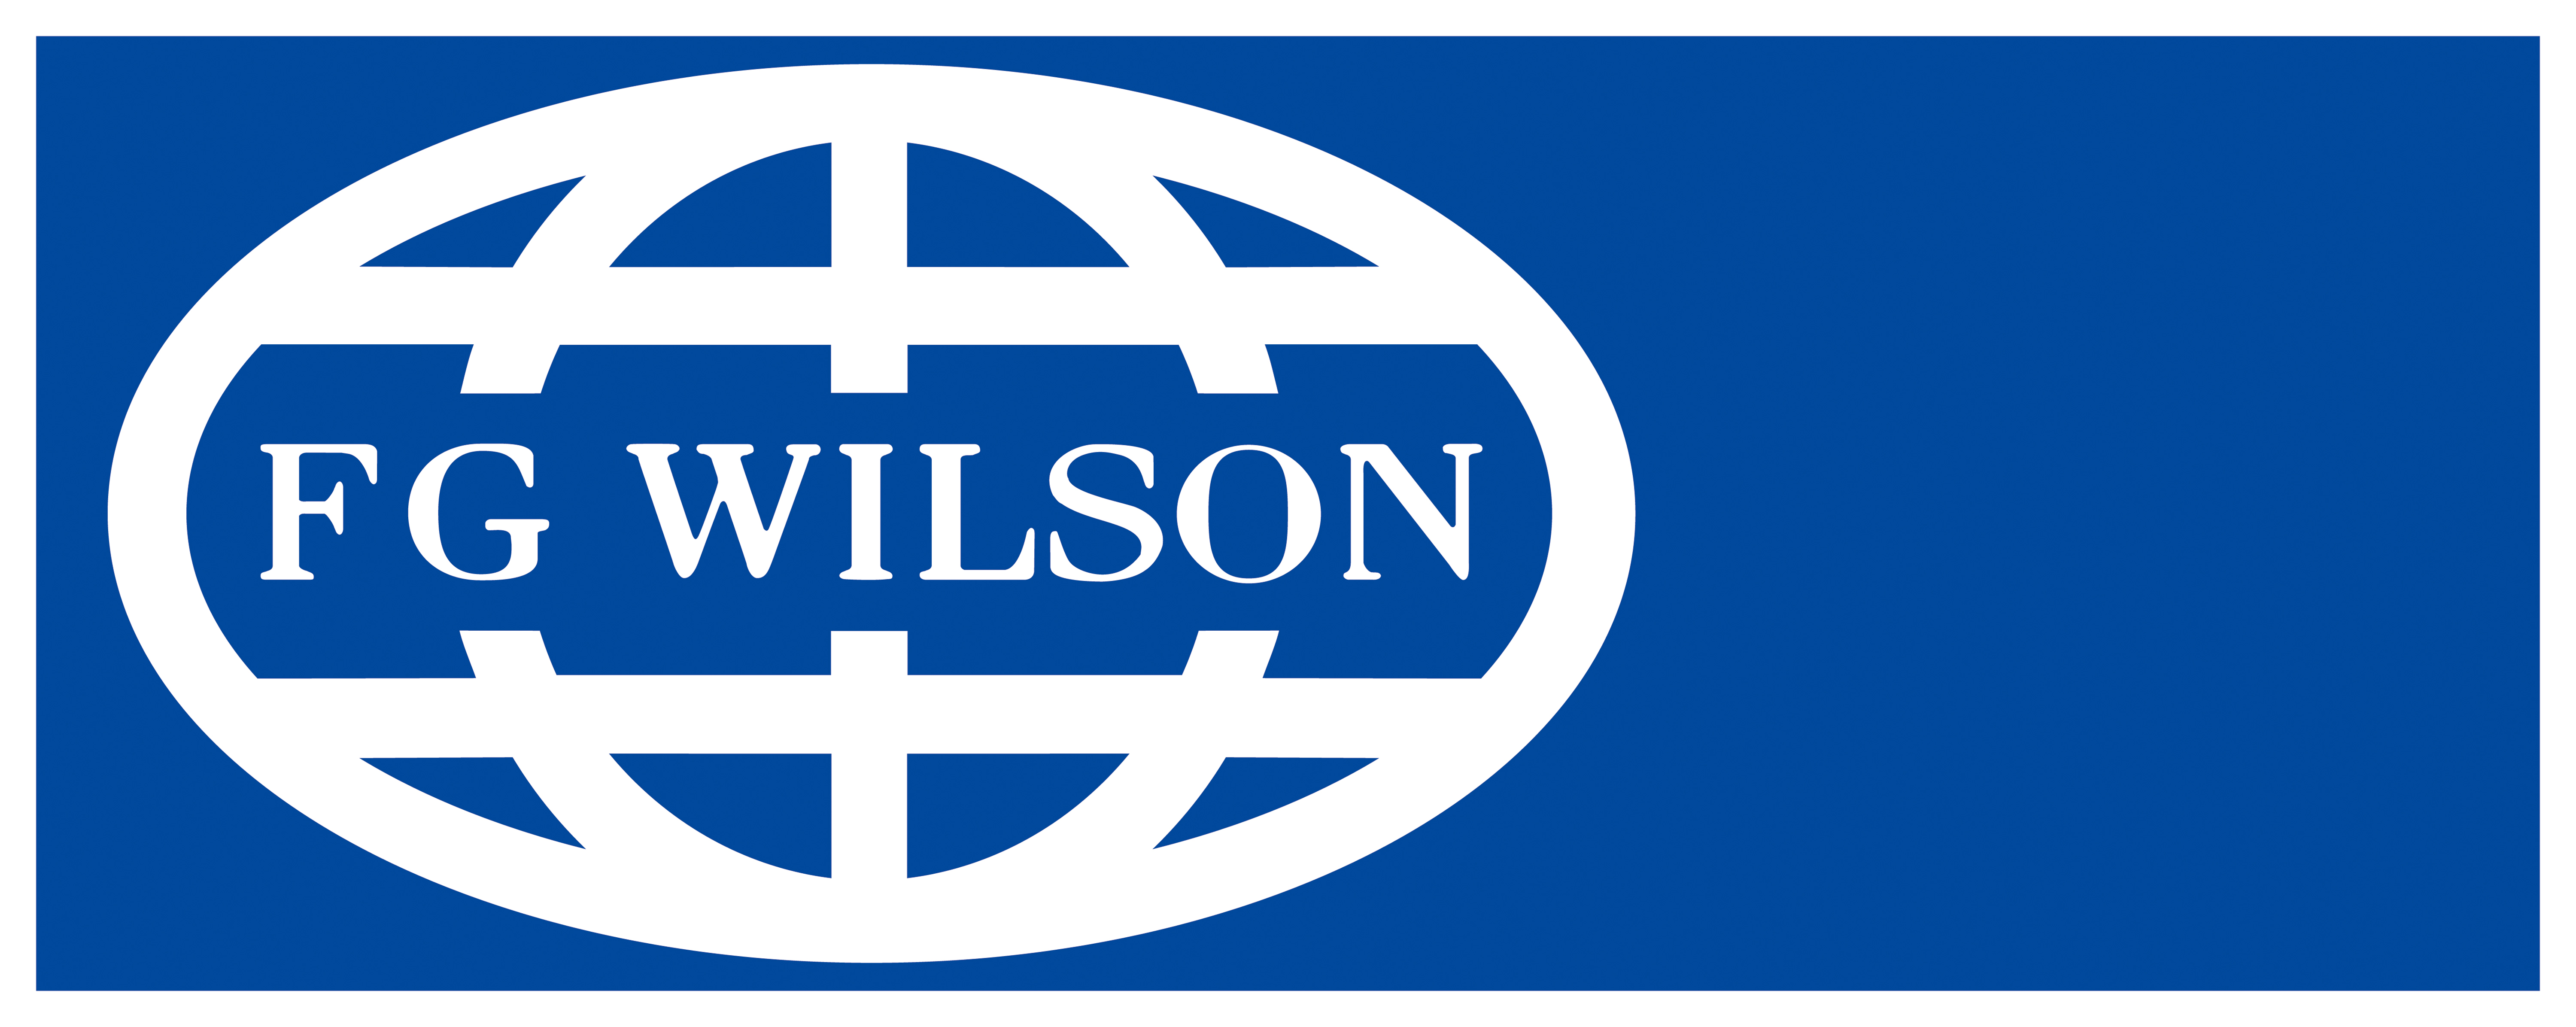 FG Wilson logo